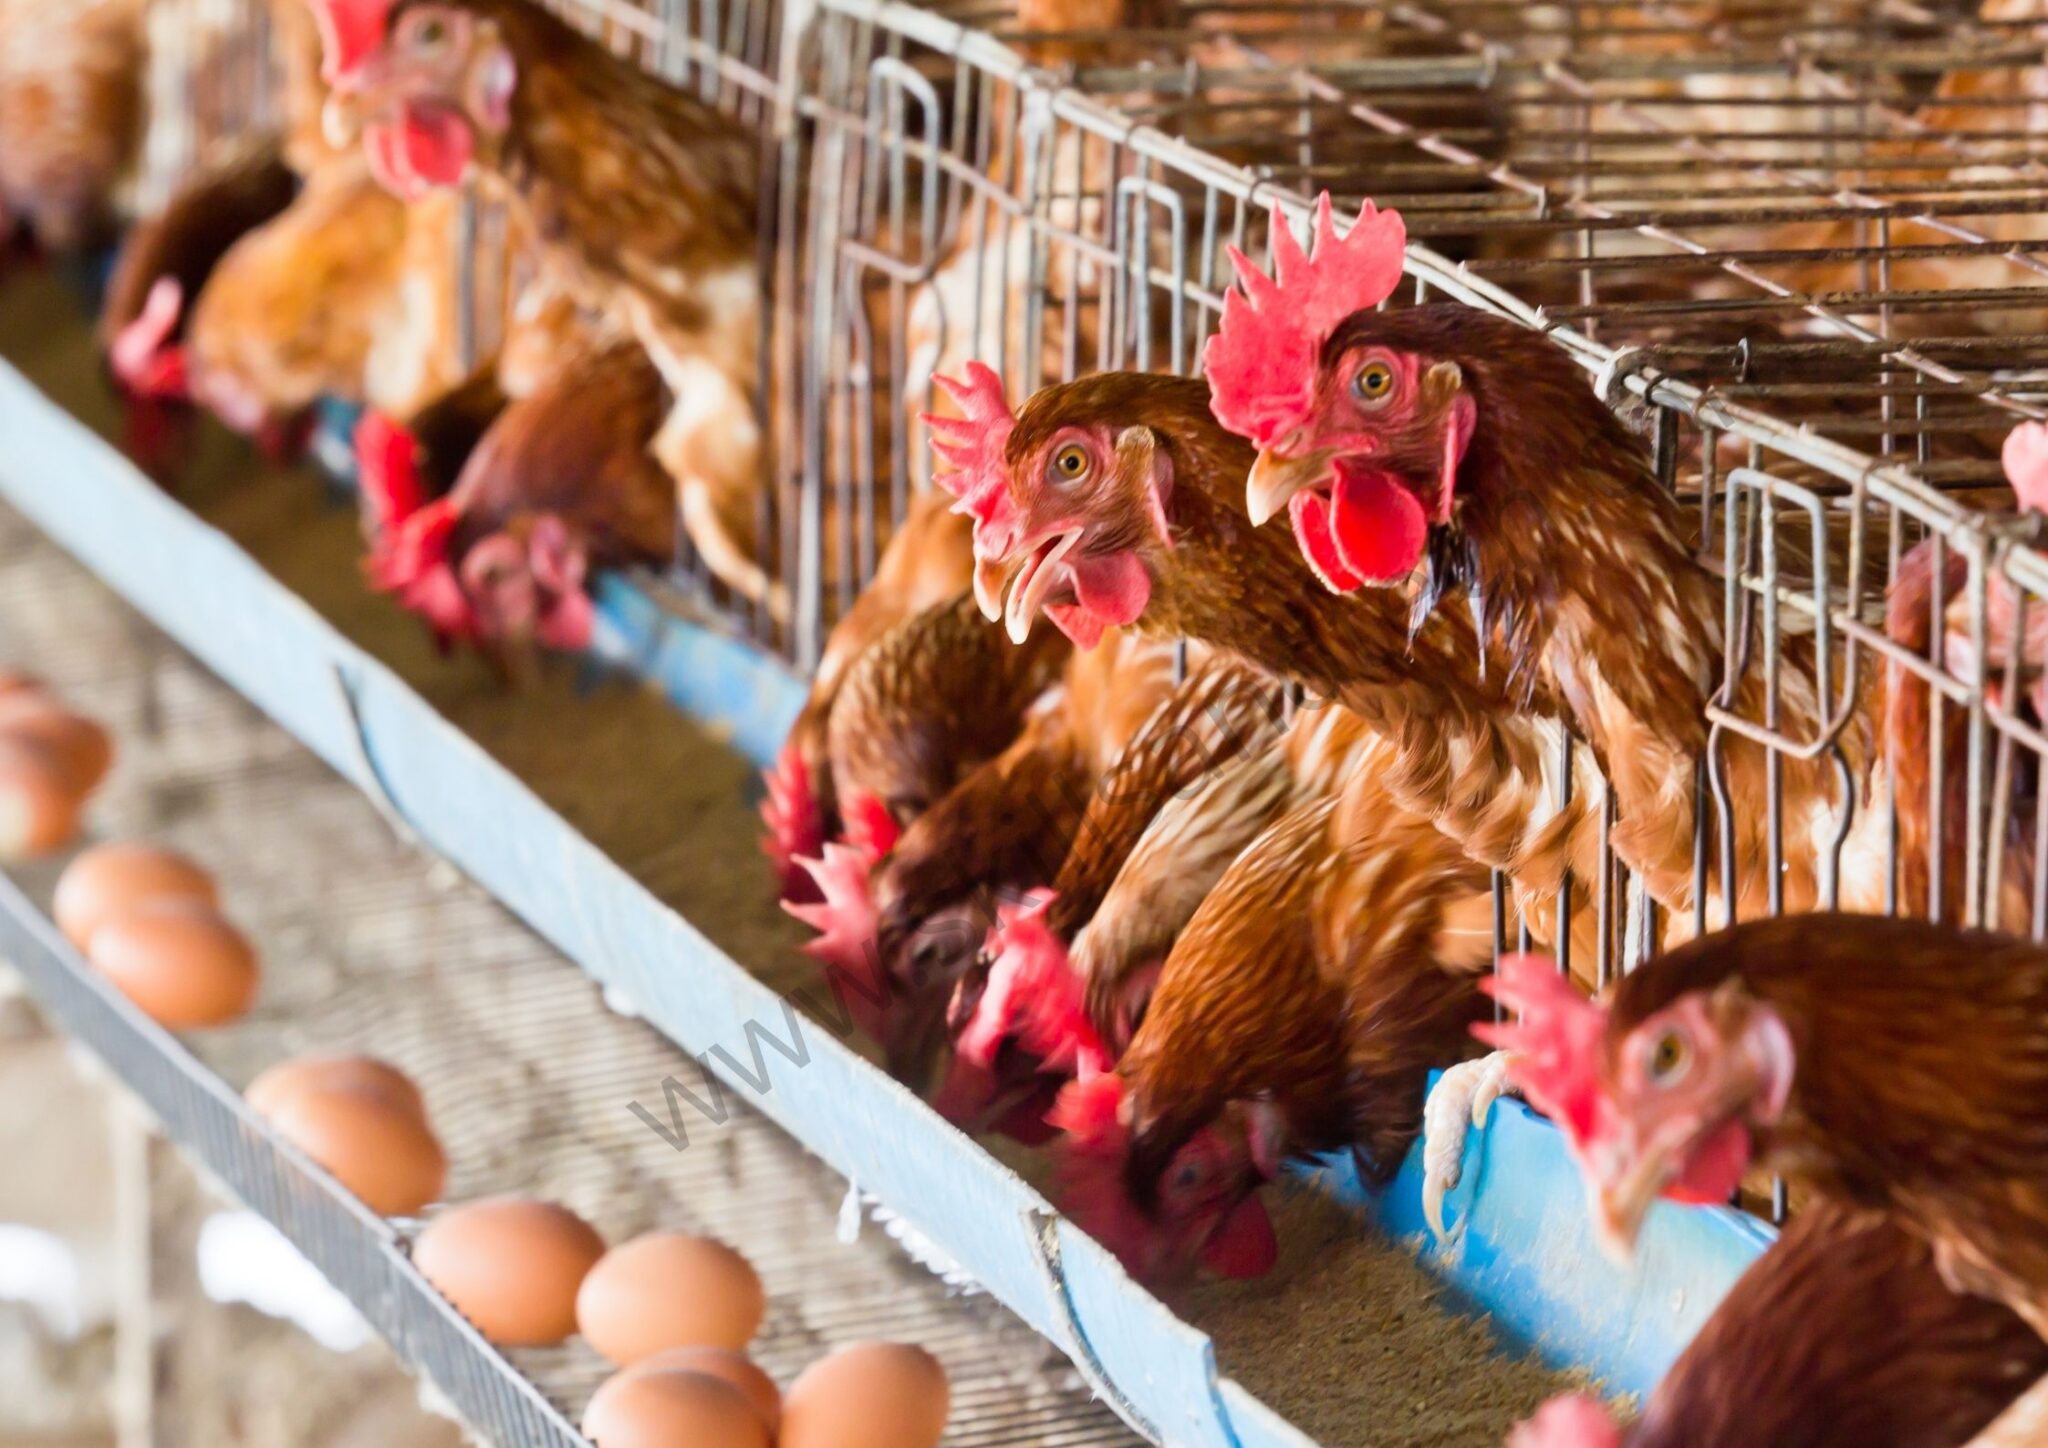 a chicken farming business plan